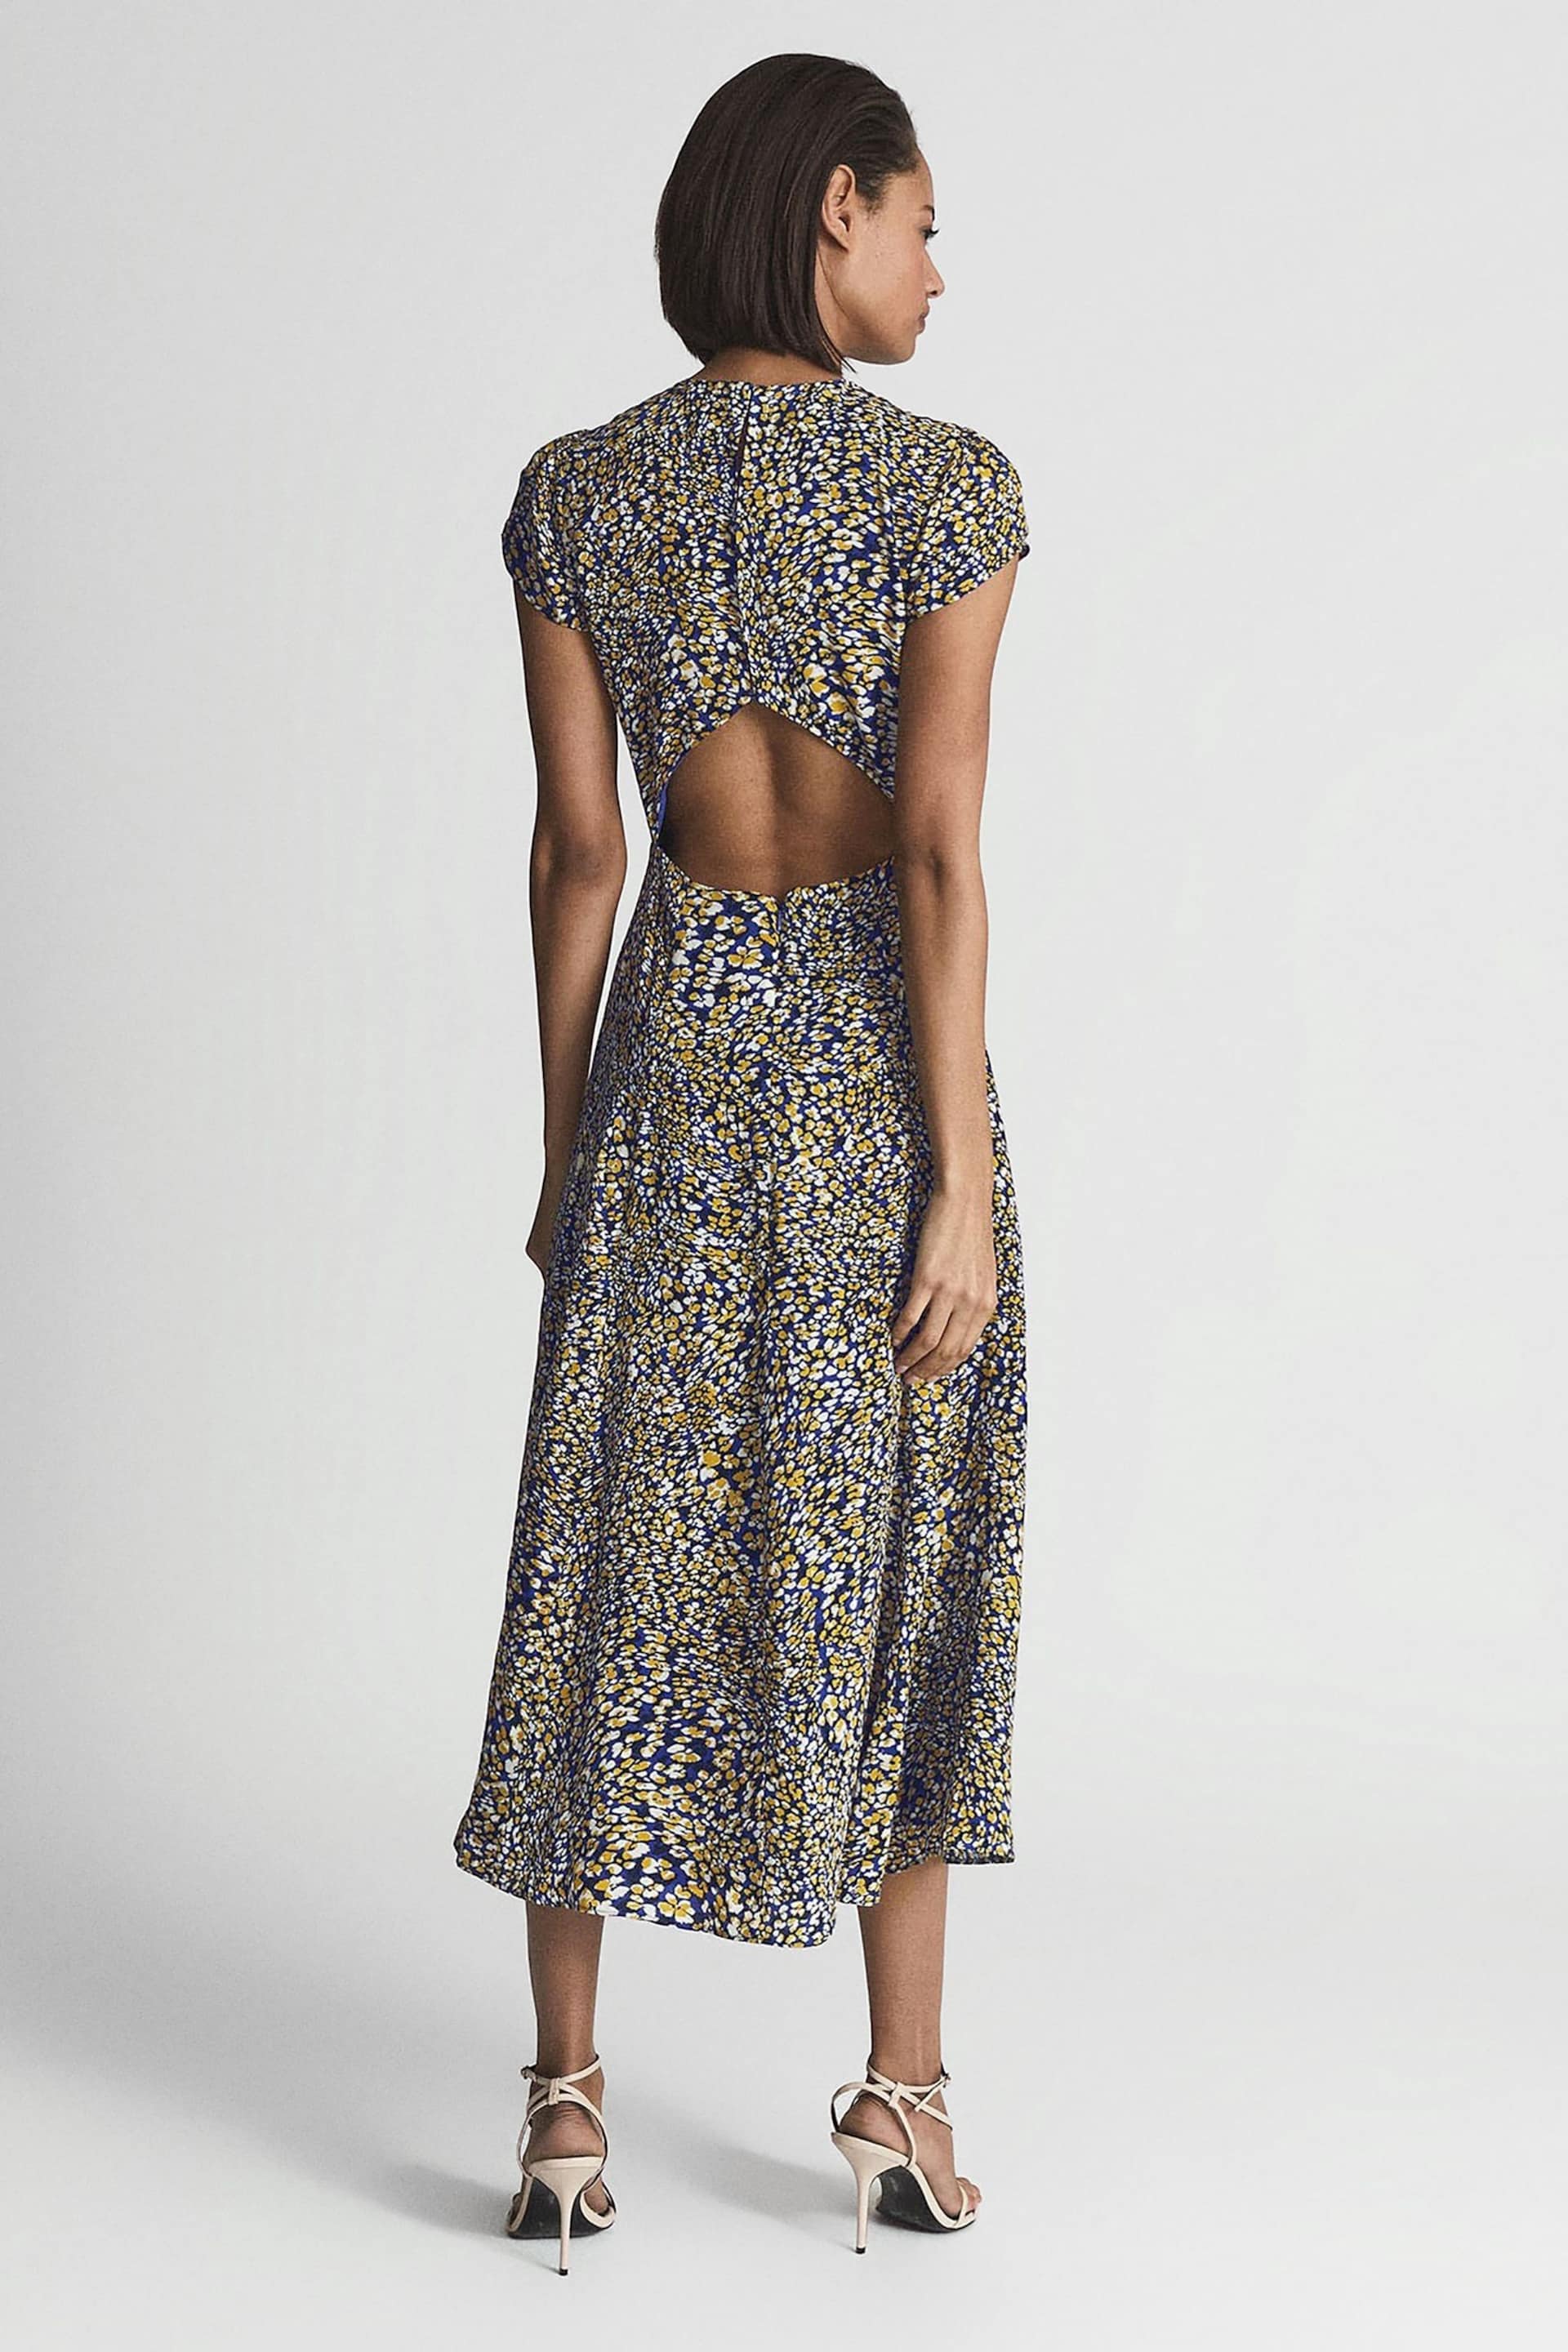 Reiss Blue Livia Printed Cut Out Back Midi Dress - Image 5 of 6